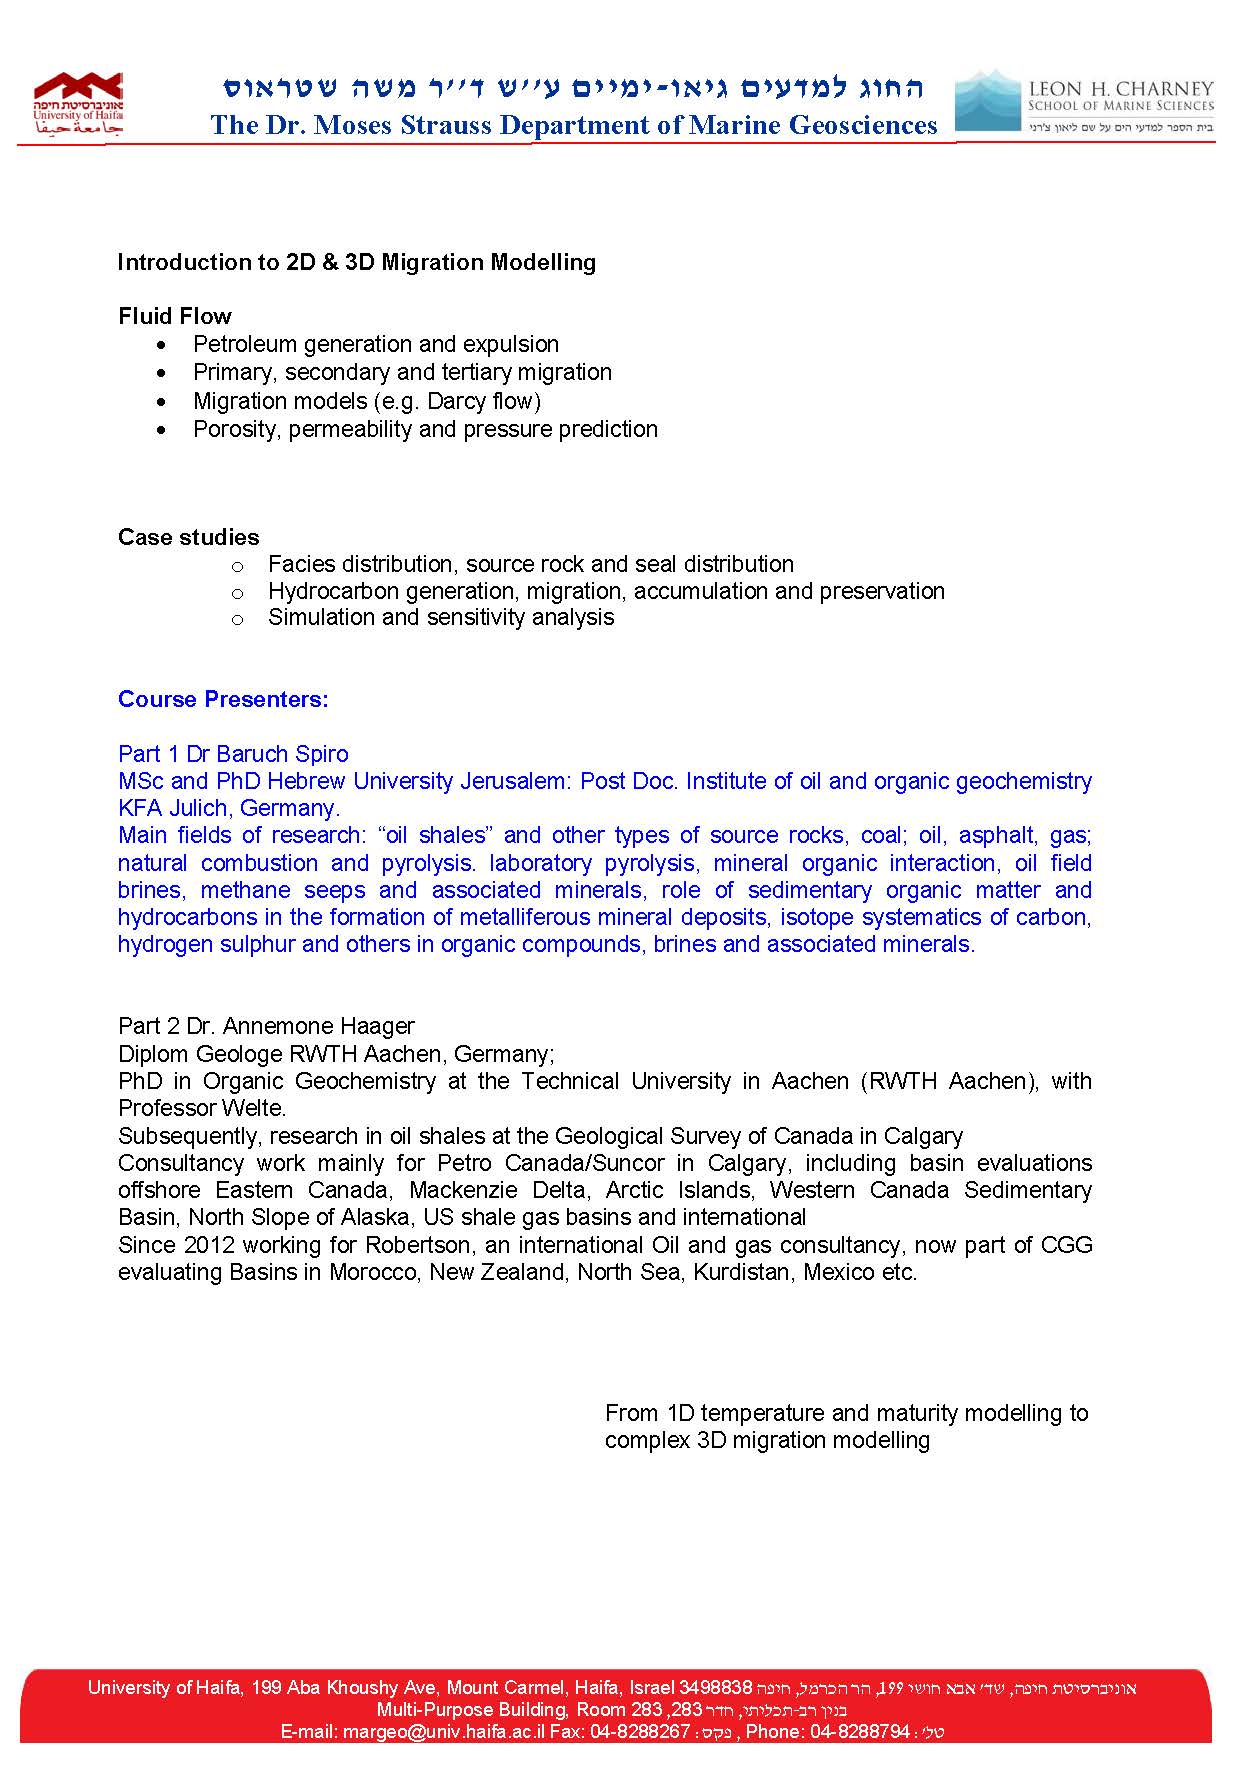 Short course OrganicGeochemPetrolModeling HaifaU Page 3